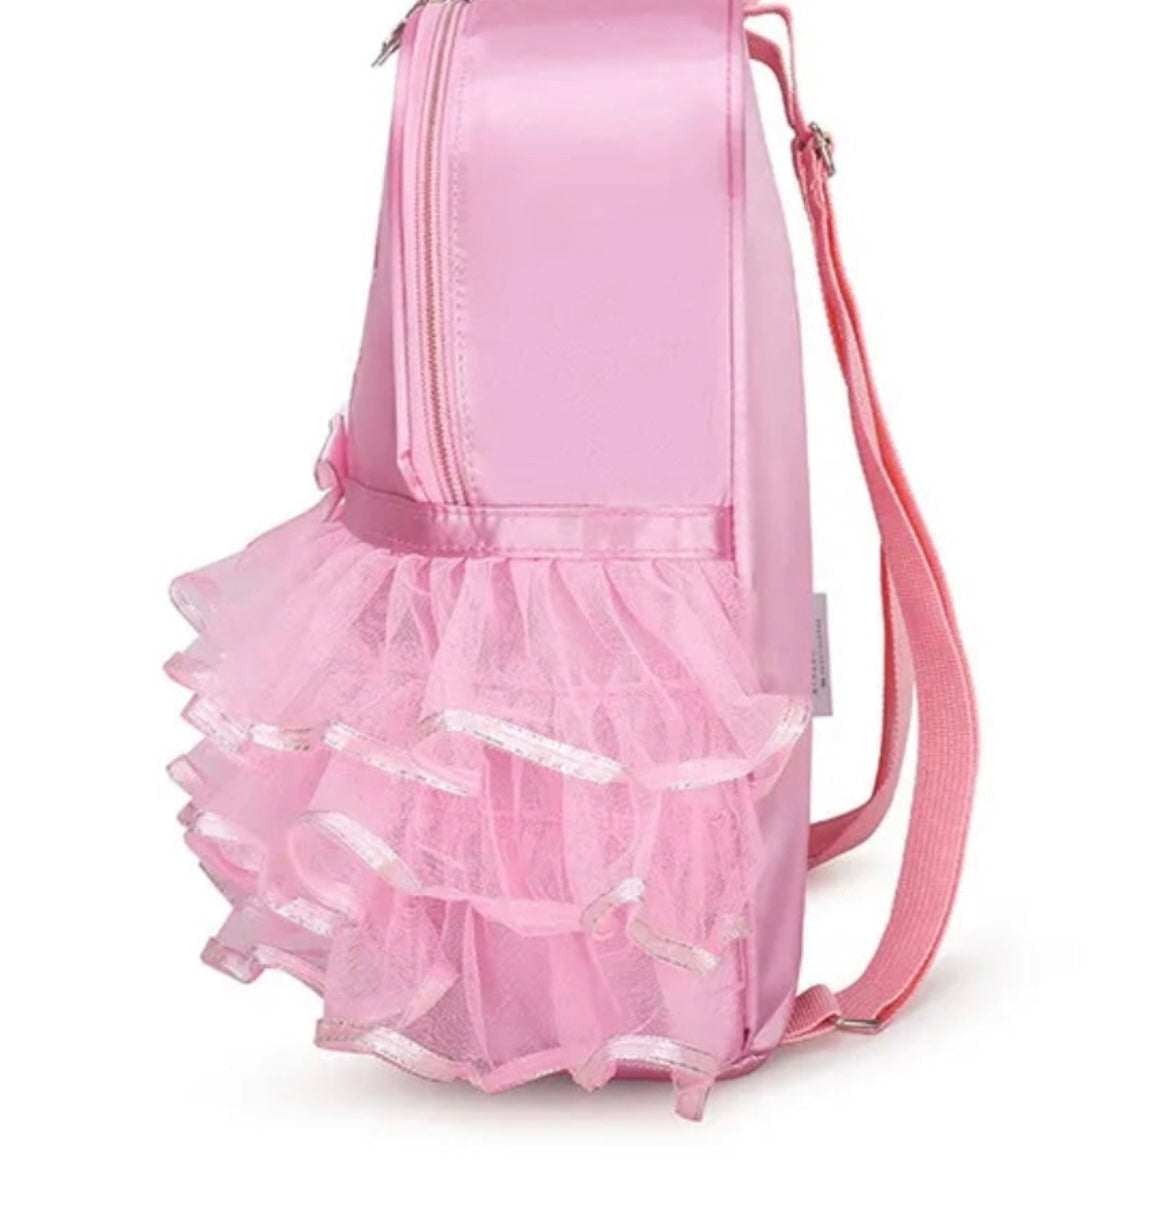 Ballerina Backpack is